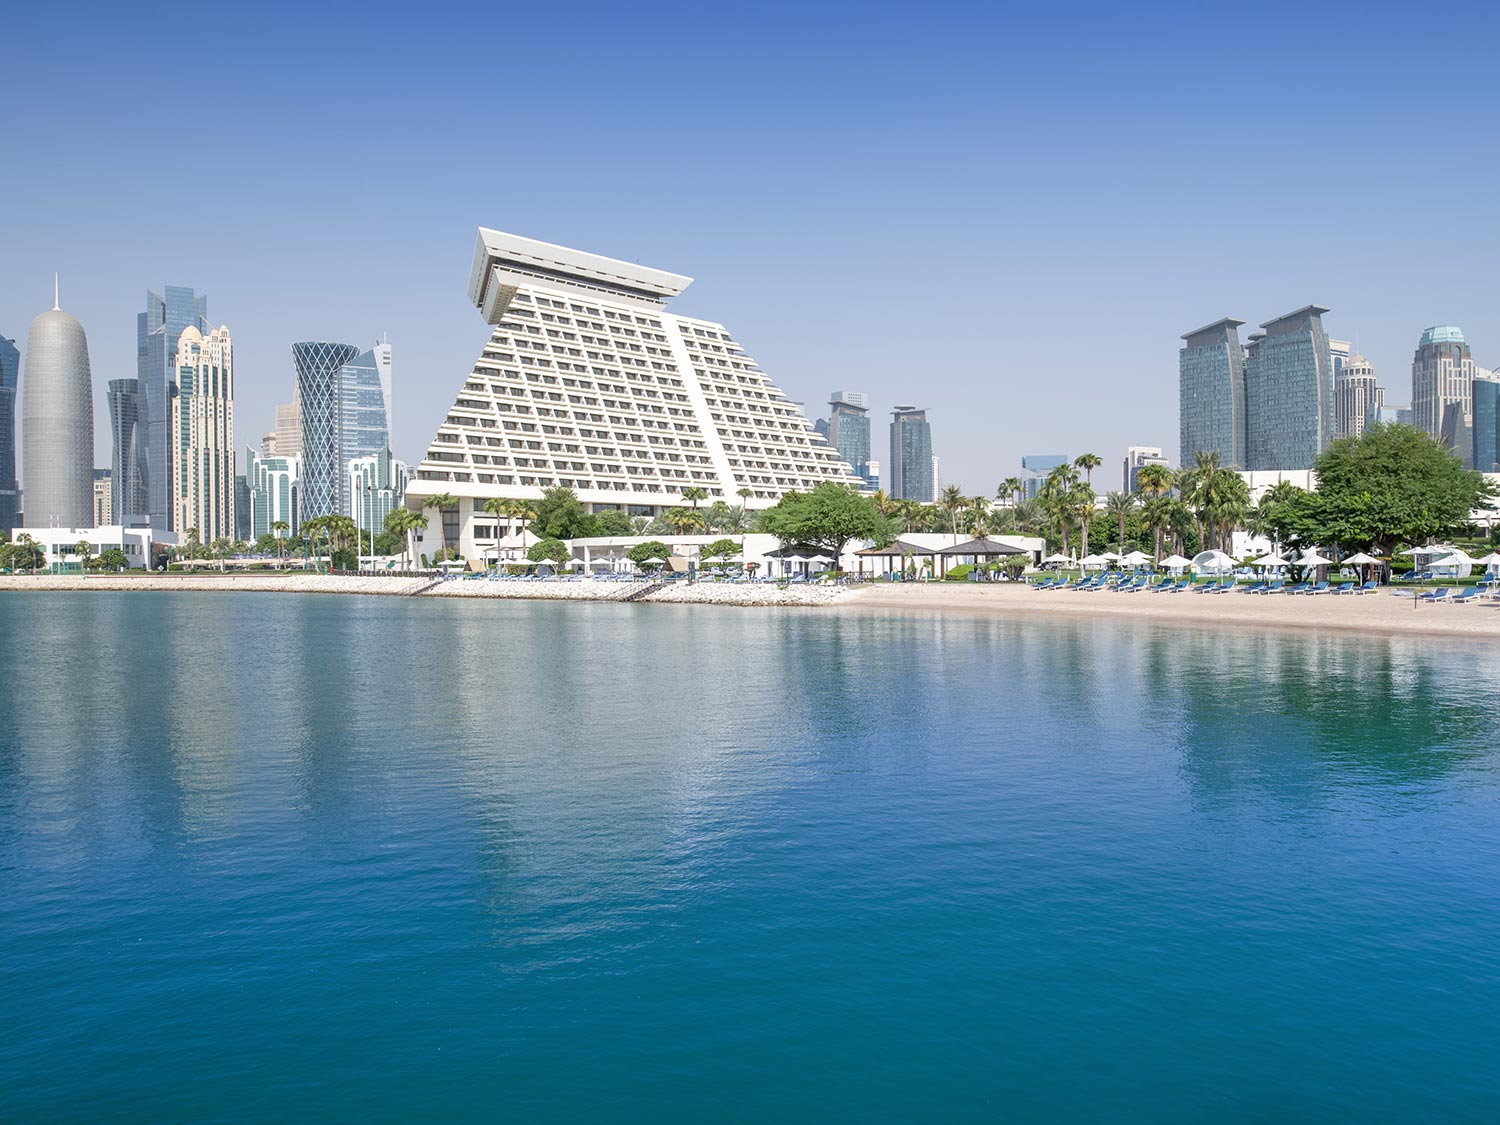 The True address of the Luxury Weddings: Sheraton Grand Doha